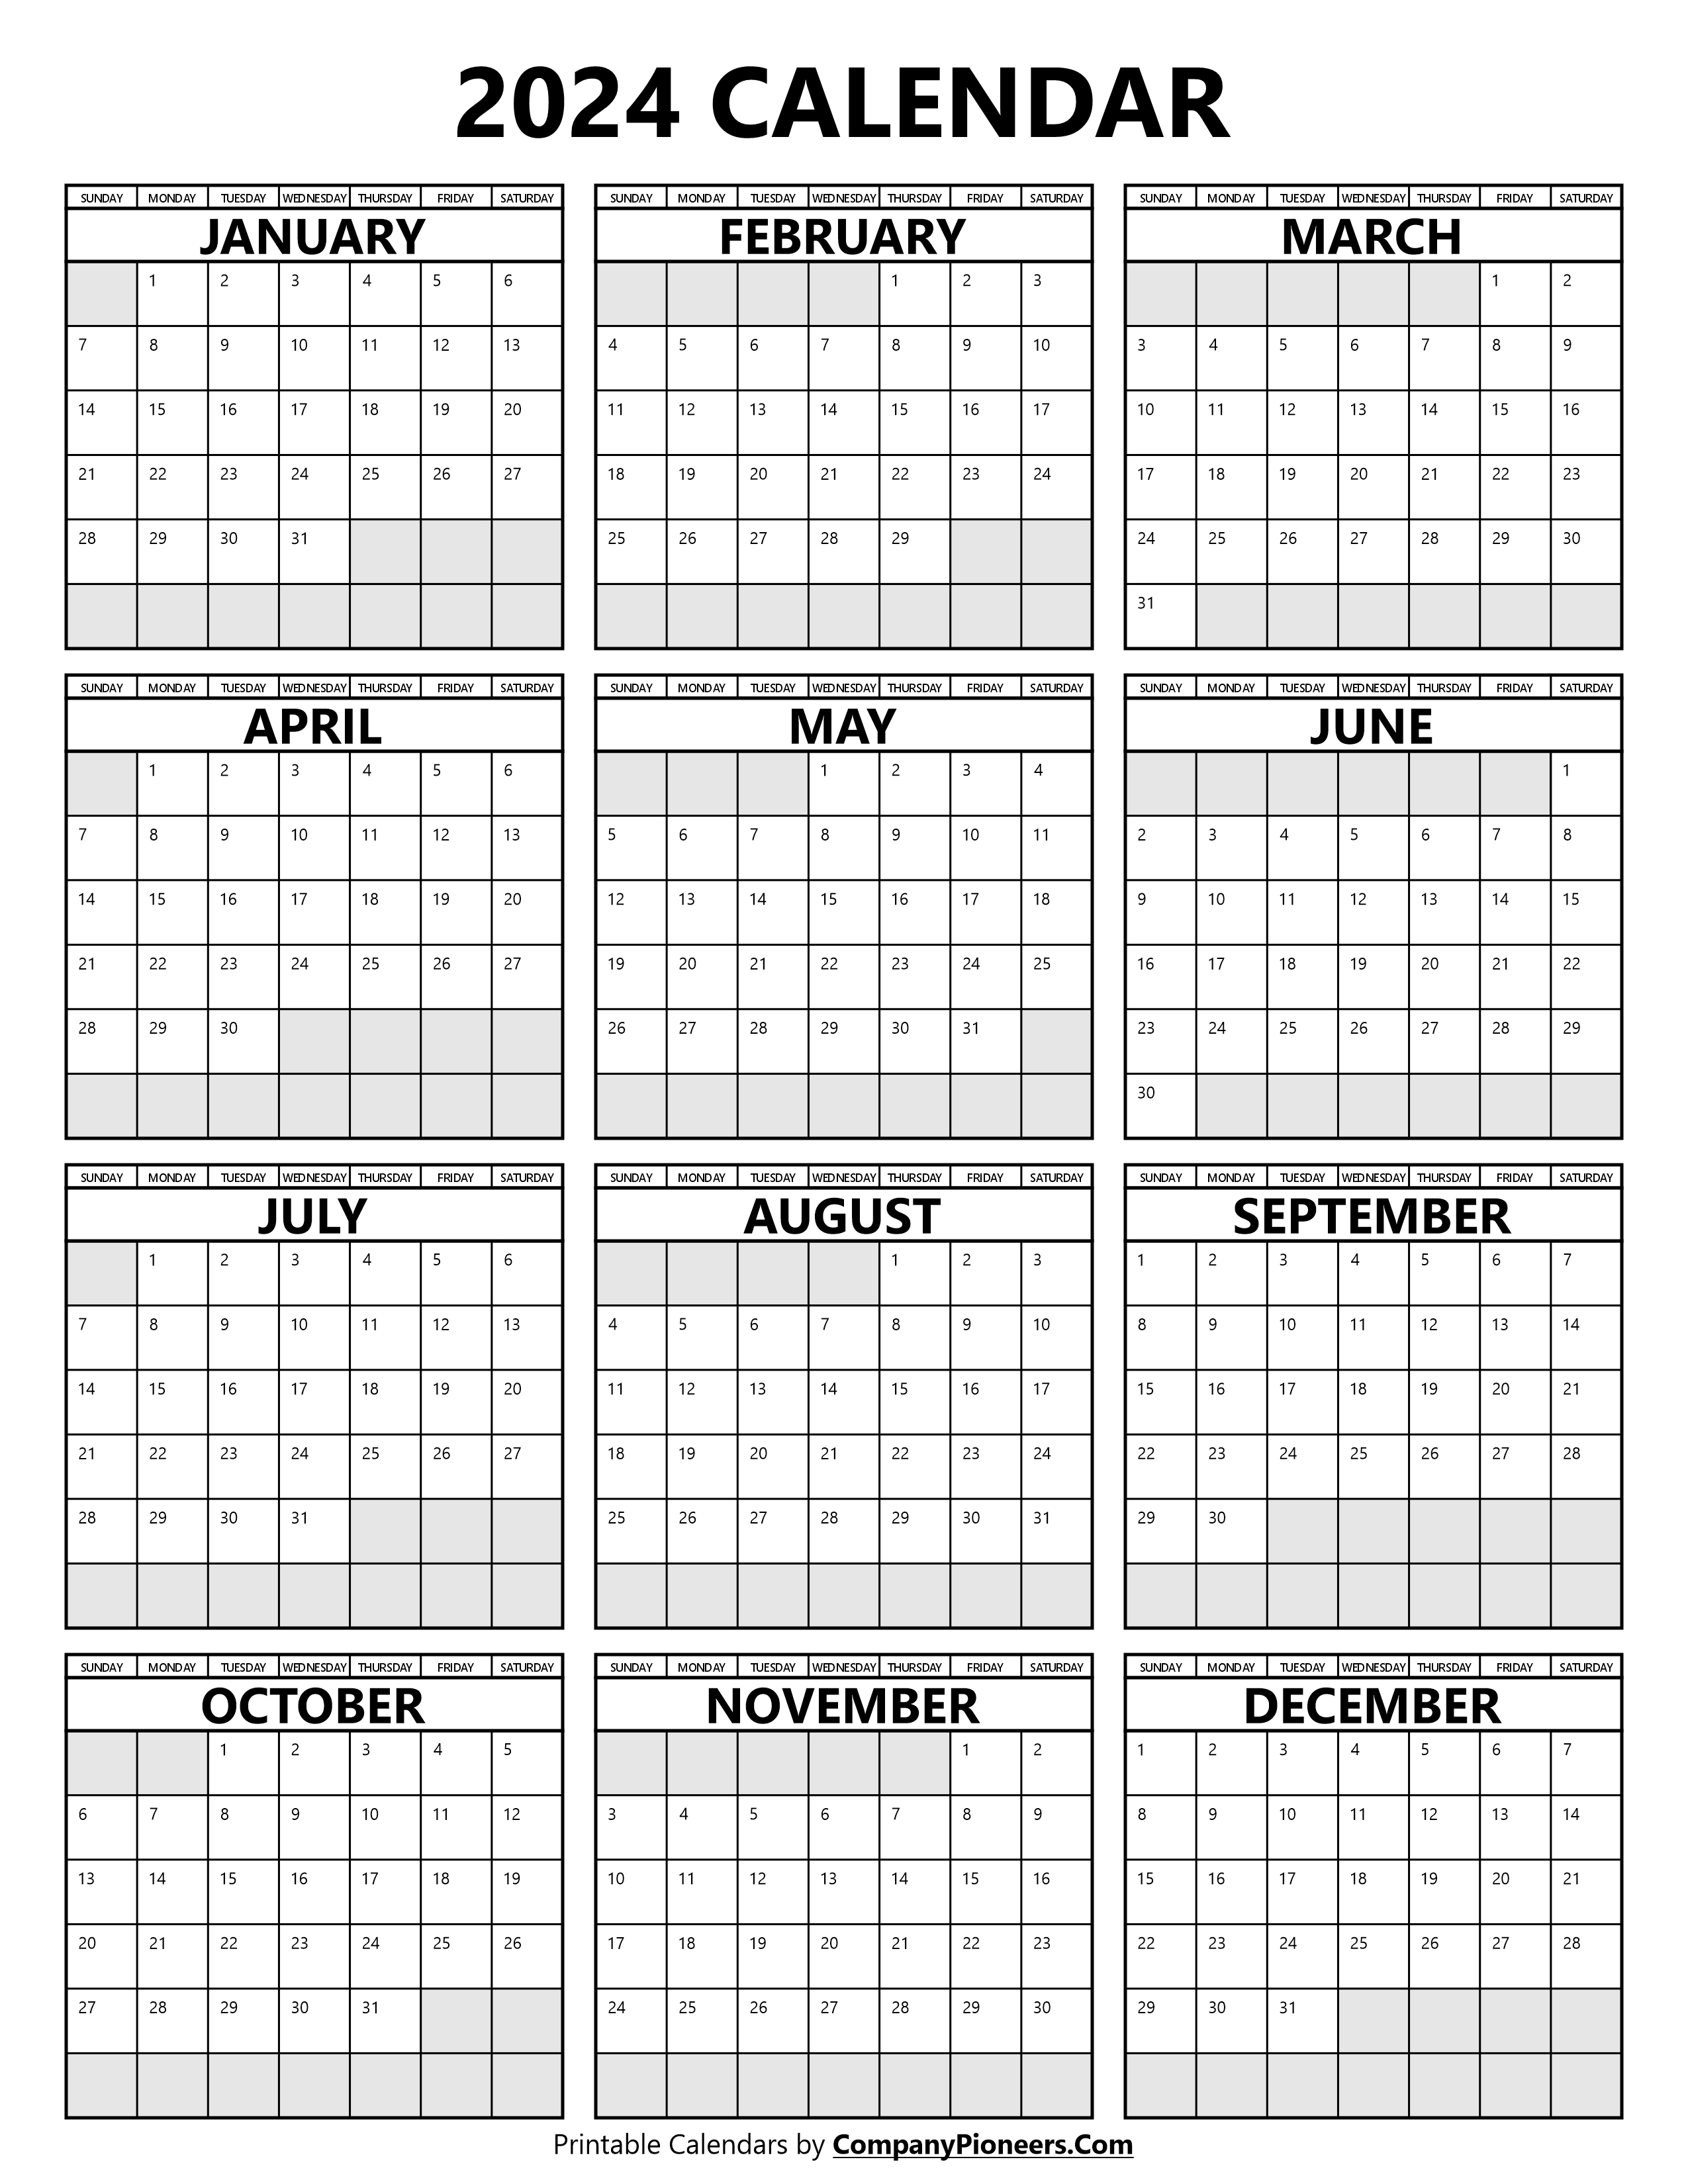 2024 Calendar Segoe UI Font